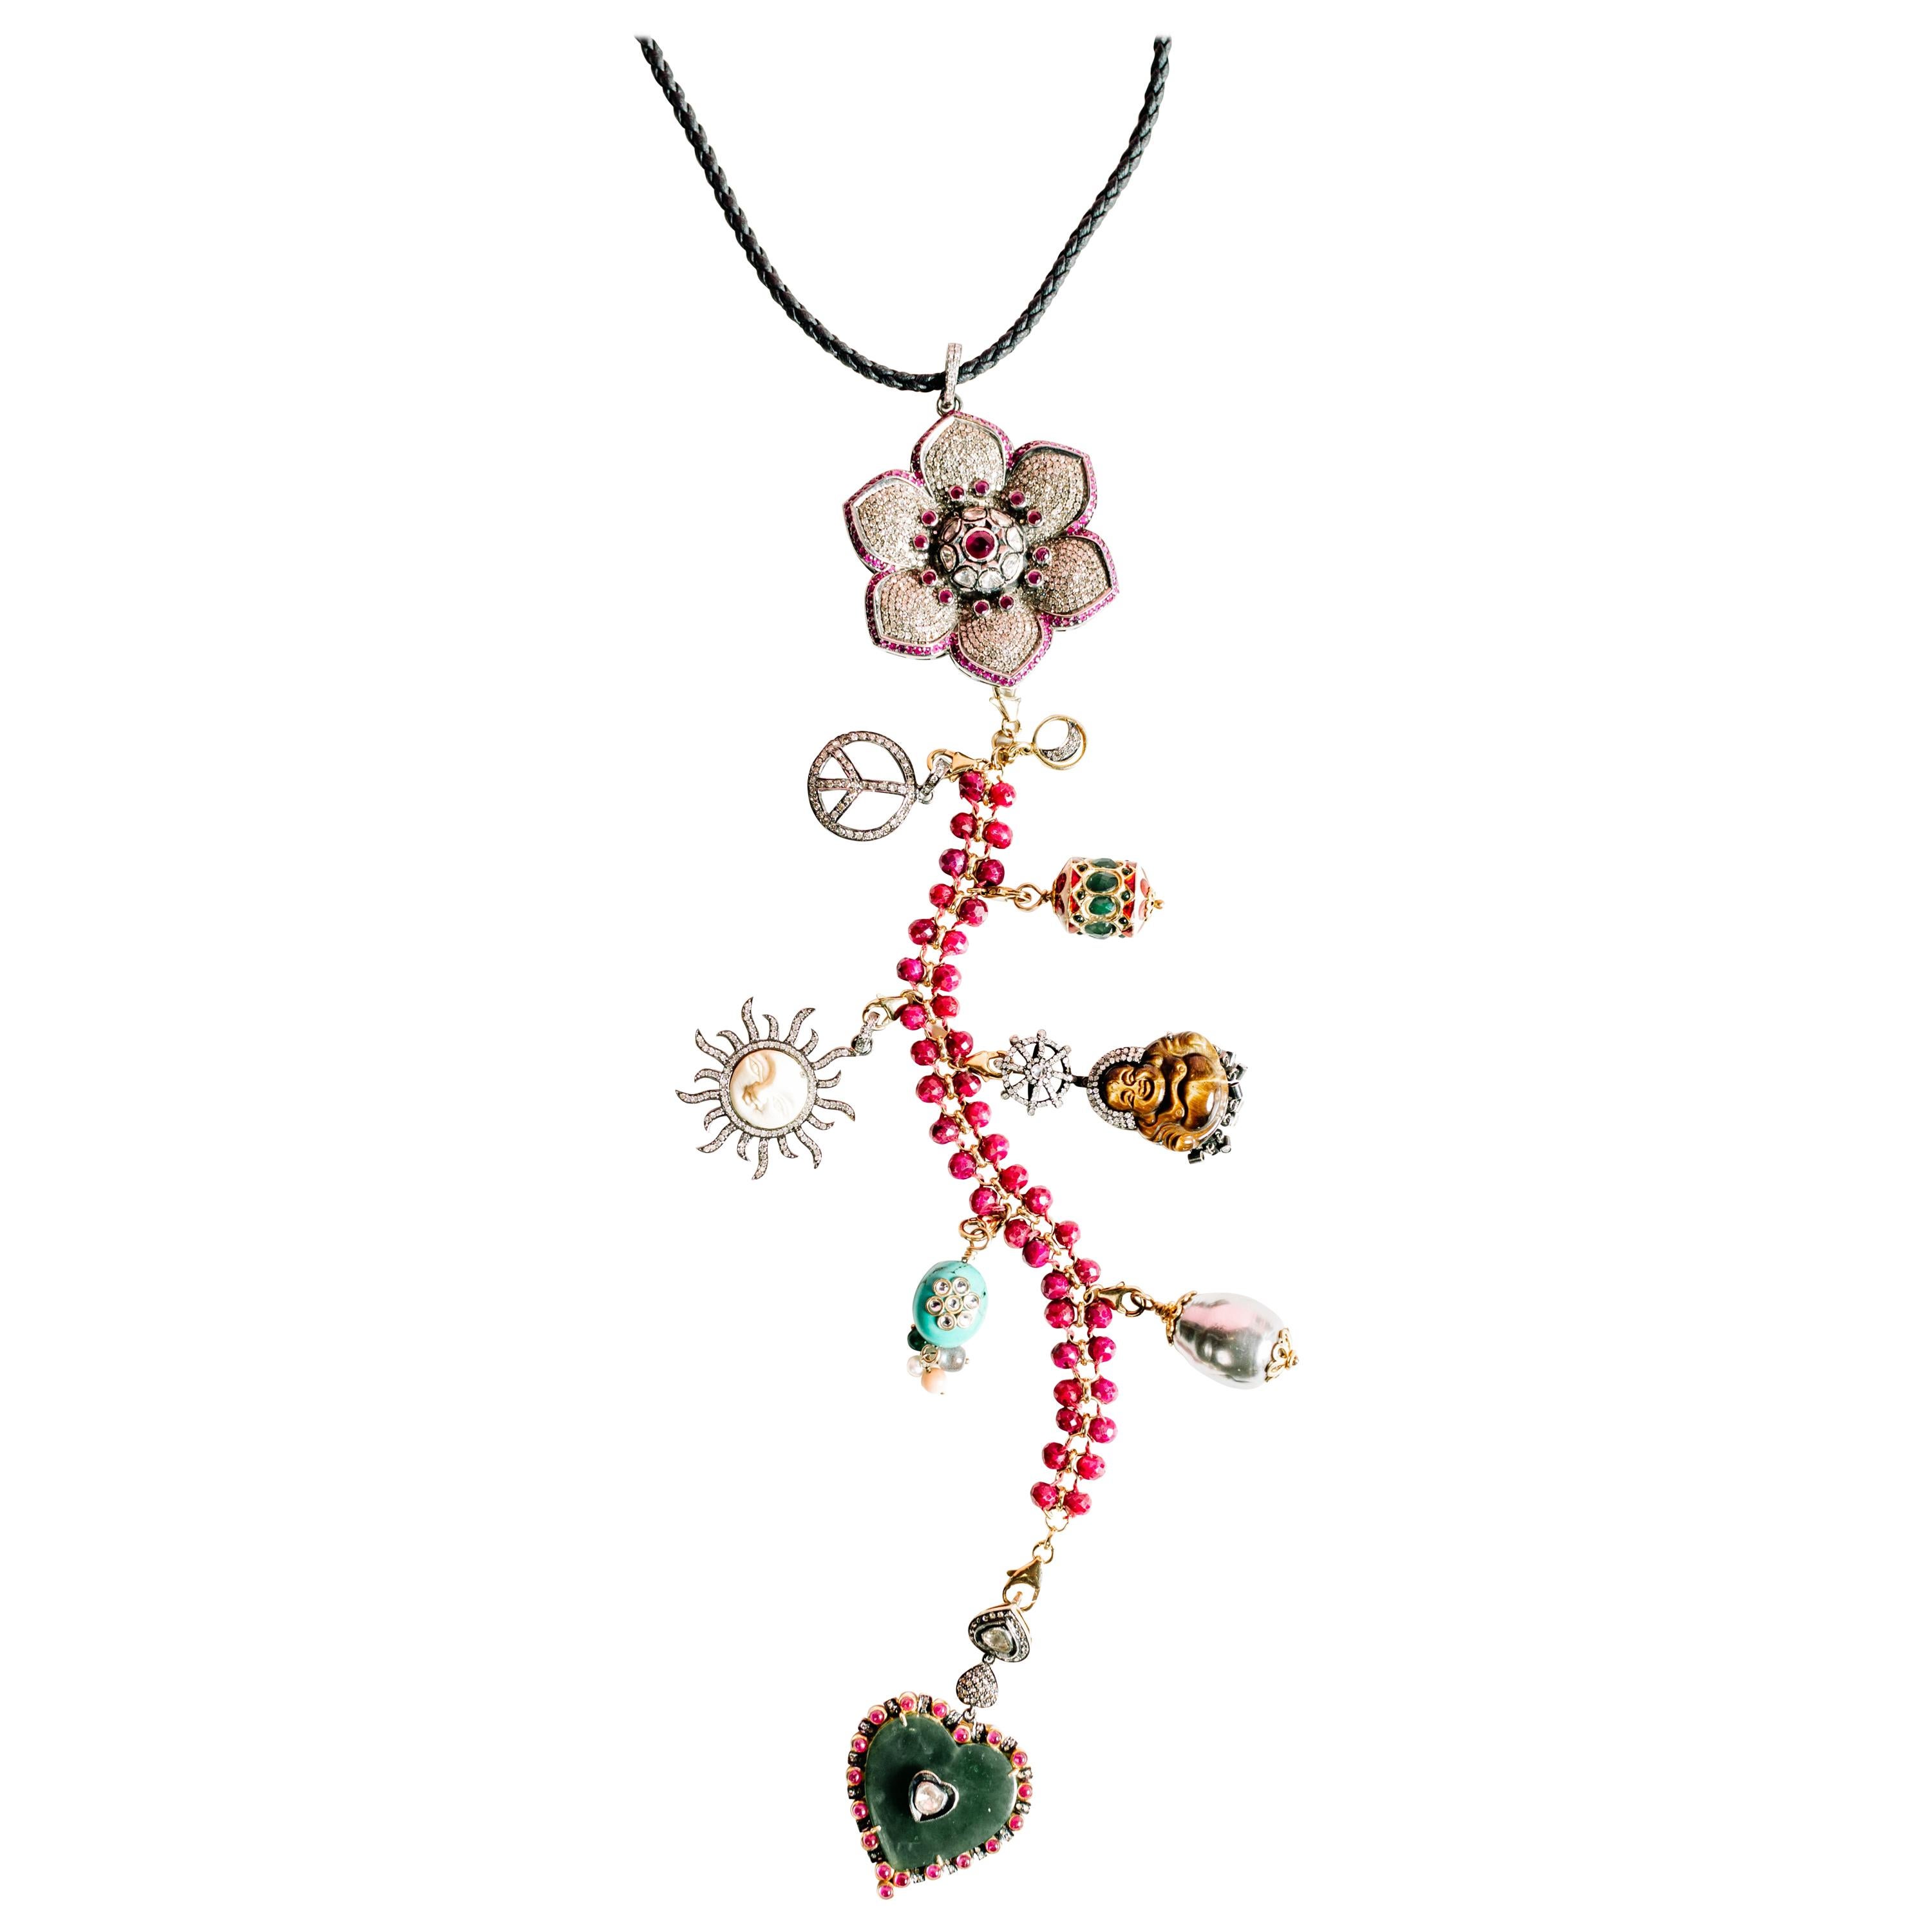 Clarissa Bronfman Signature 'Reine Du Soleil' Symbol Tree Necklace